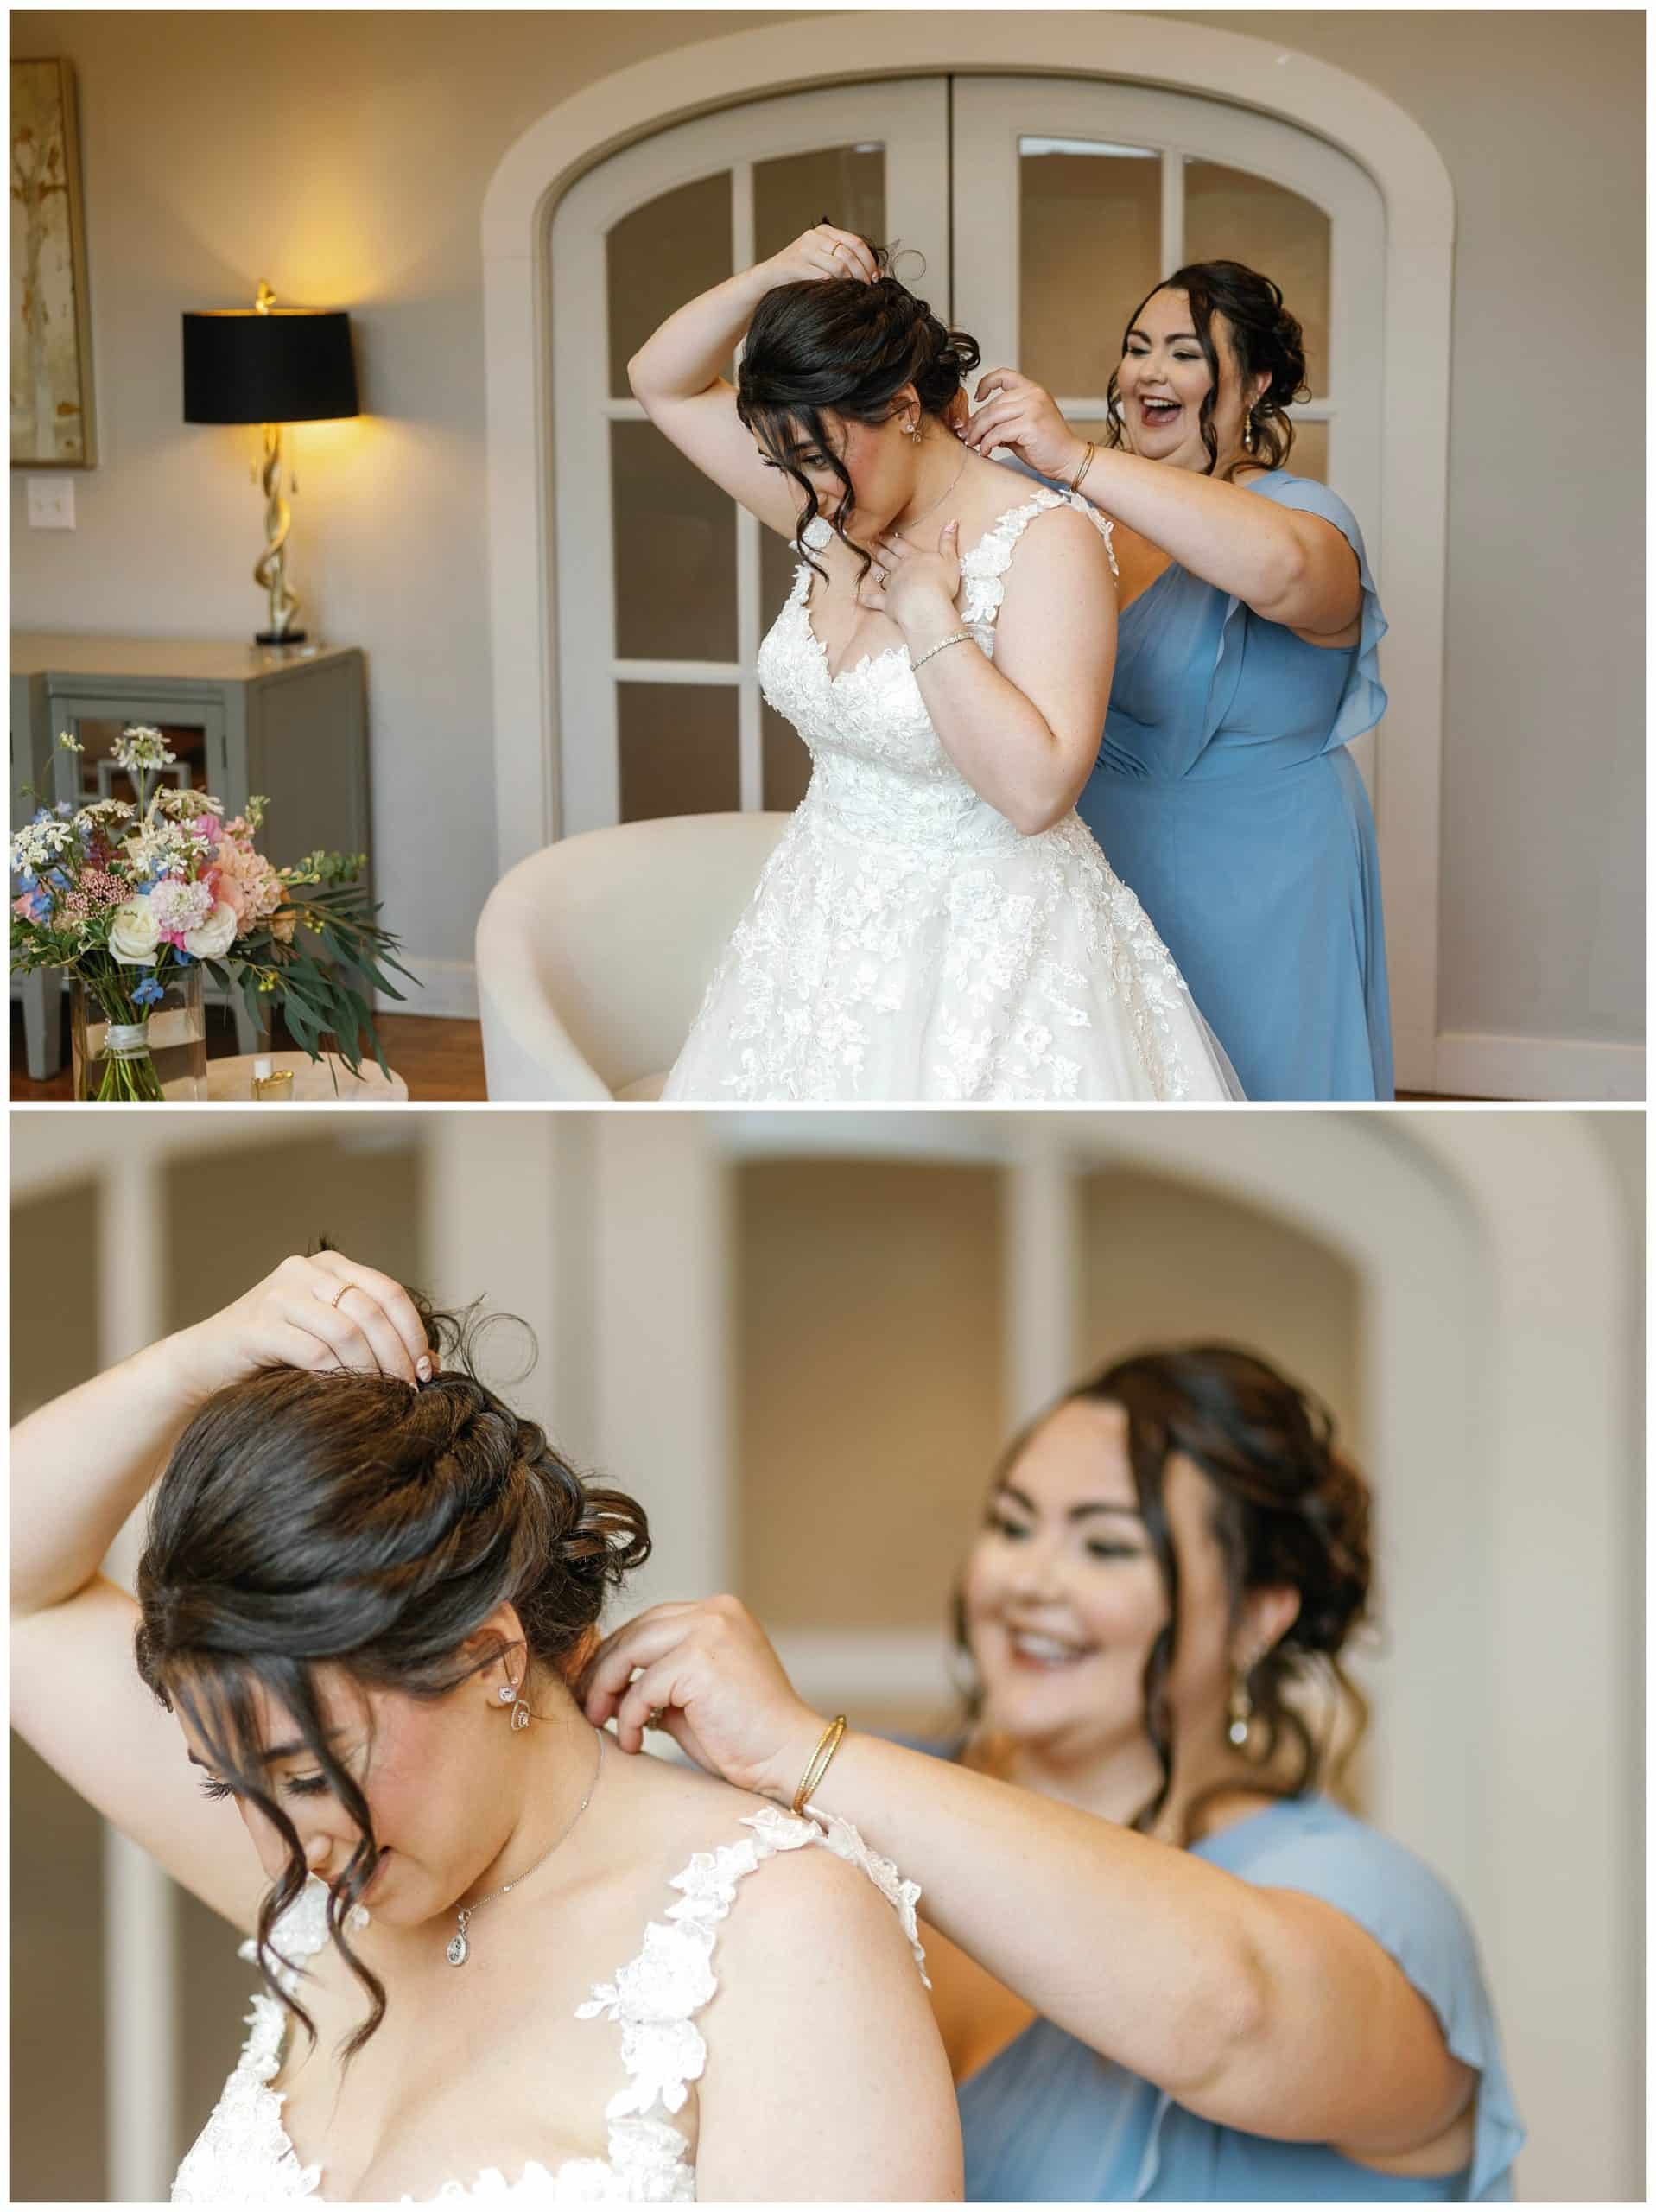 Bridesmaid in blue dress helps bride get her necklace.